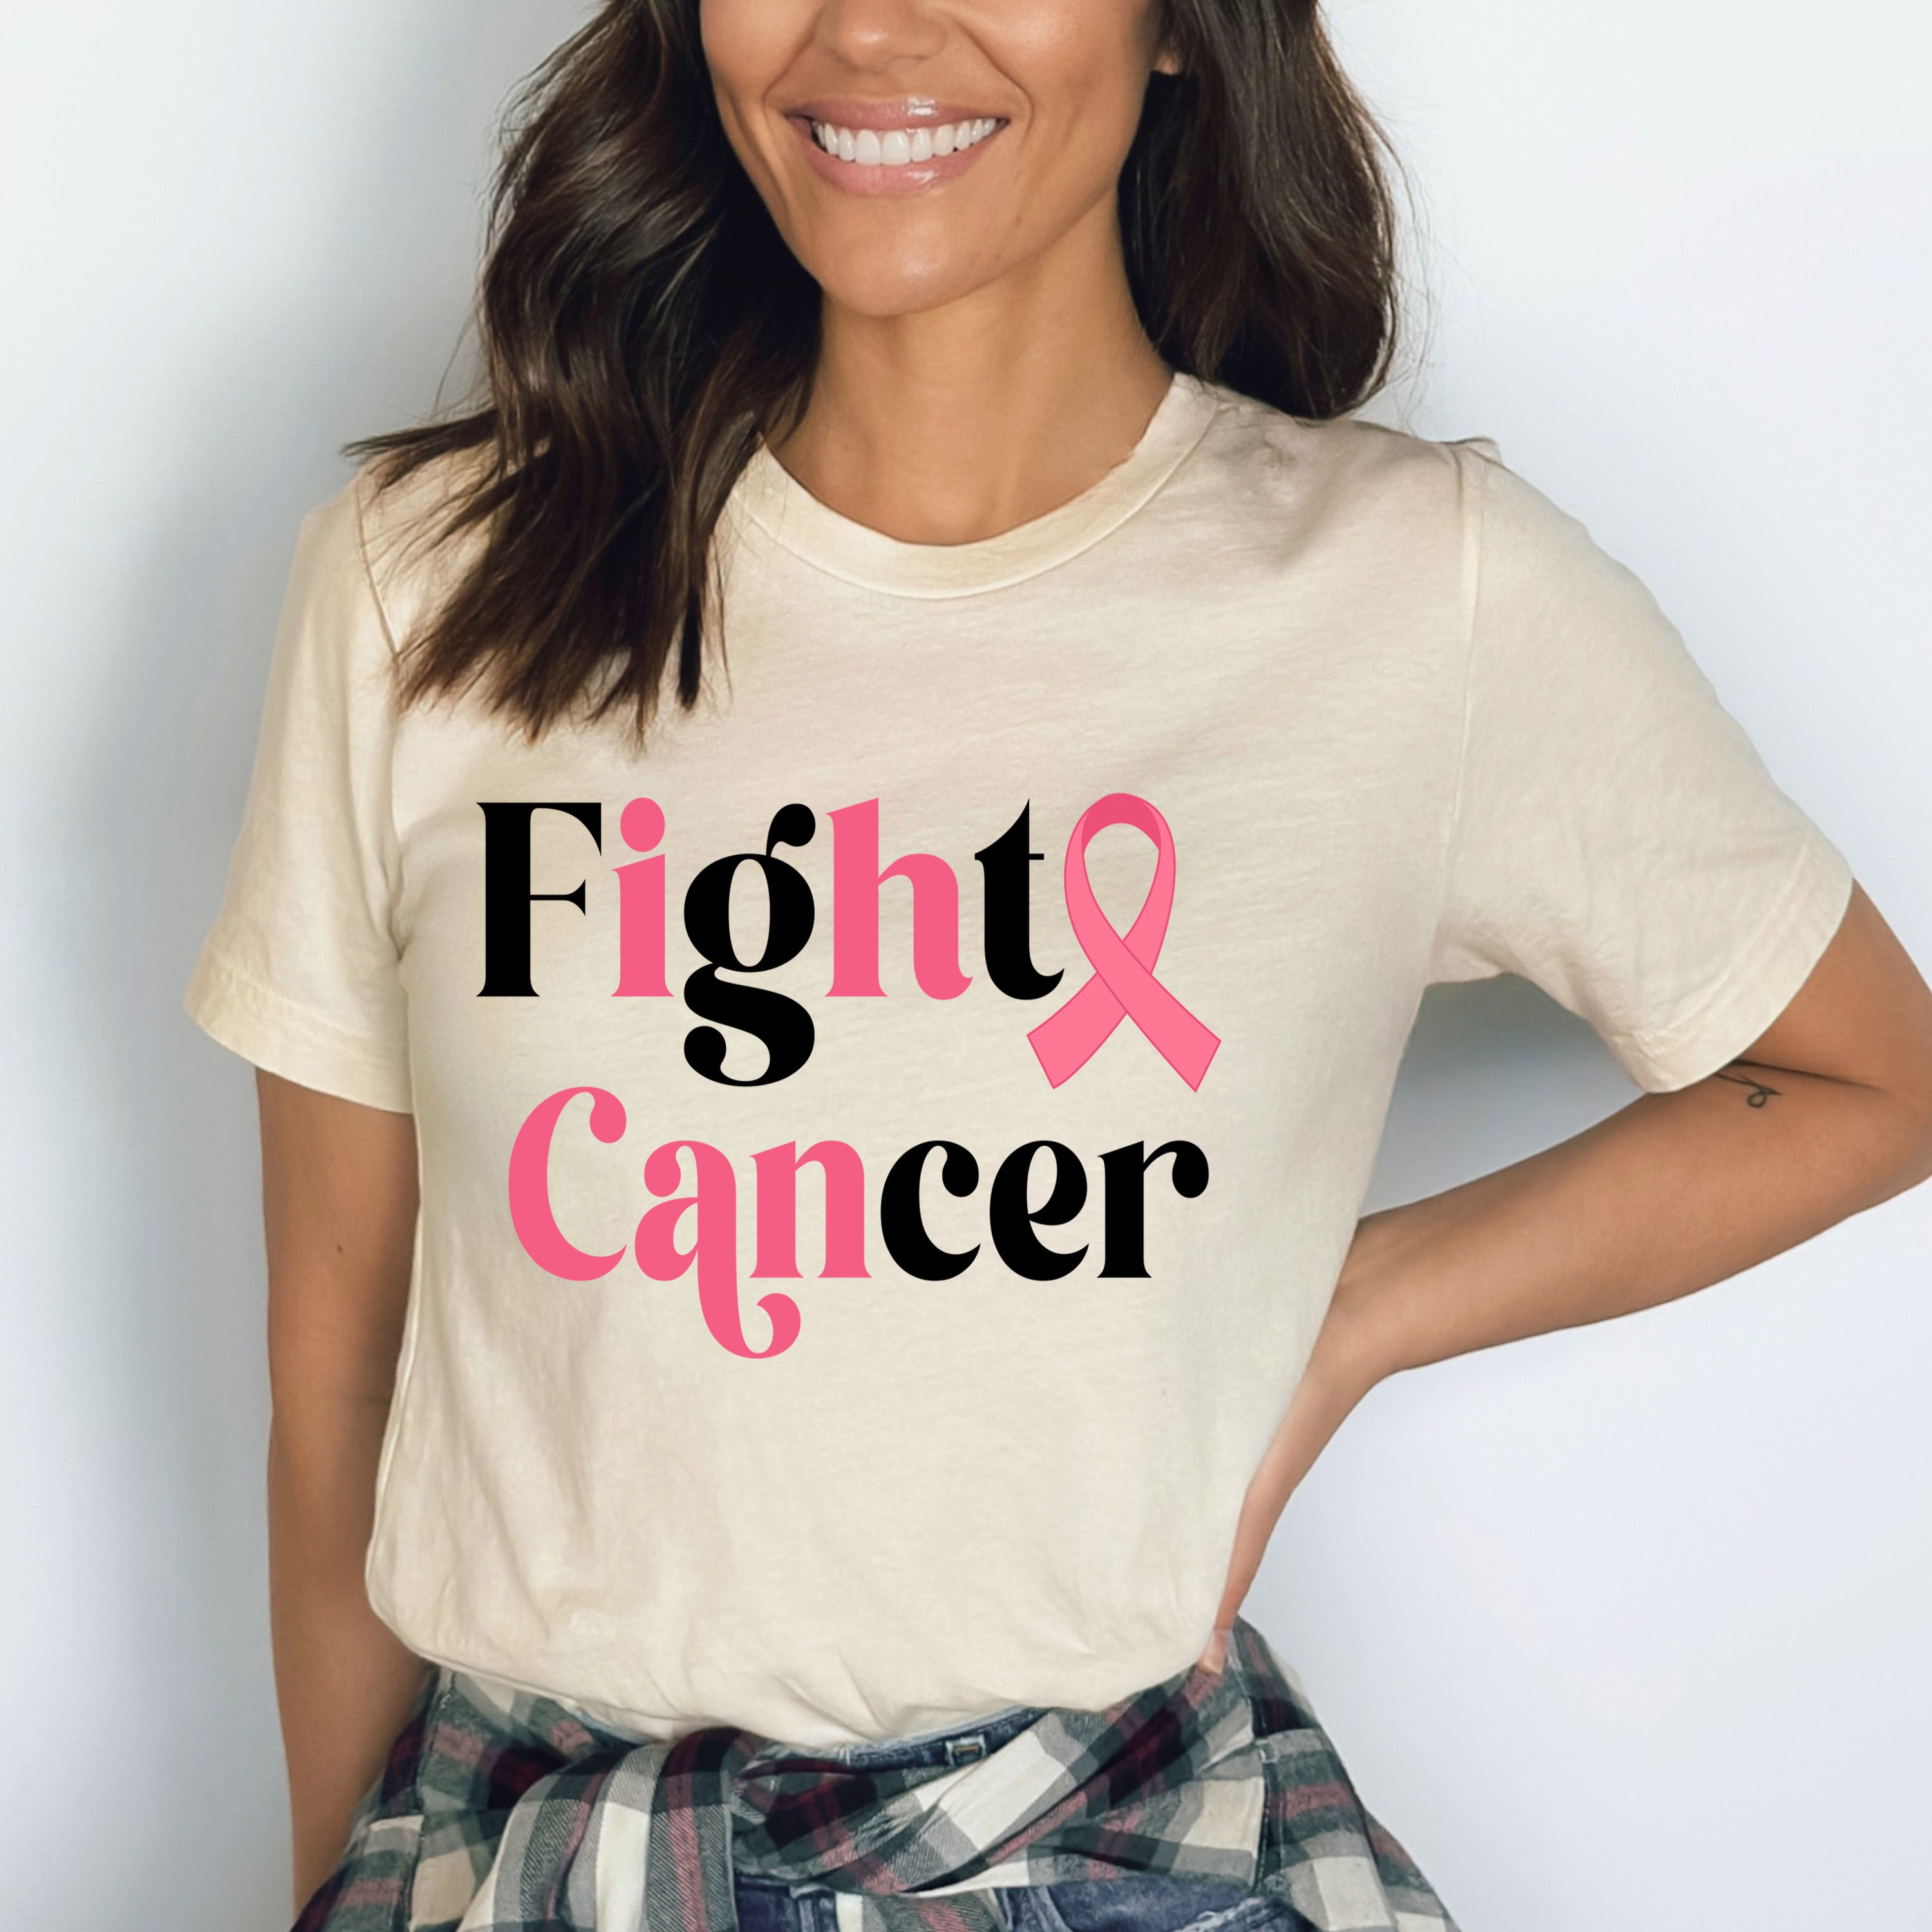 Fight cancer - Bella Canvas